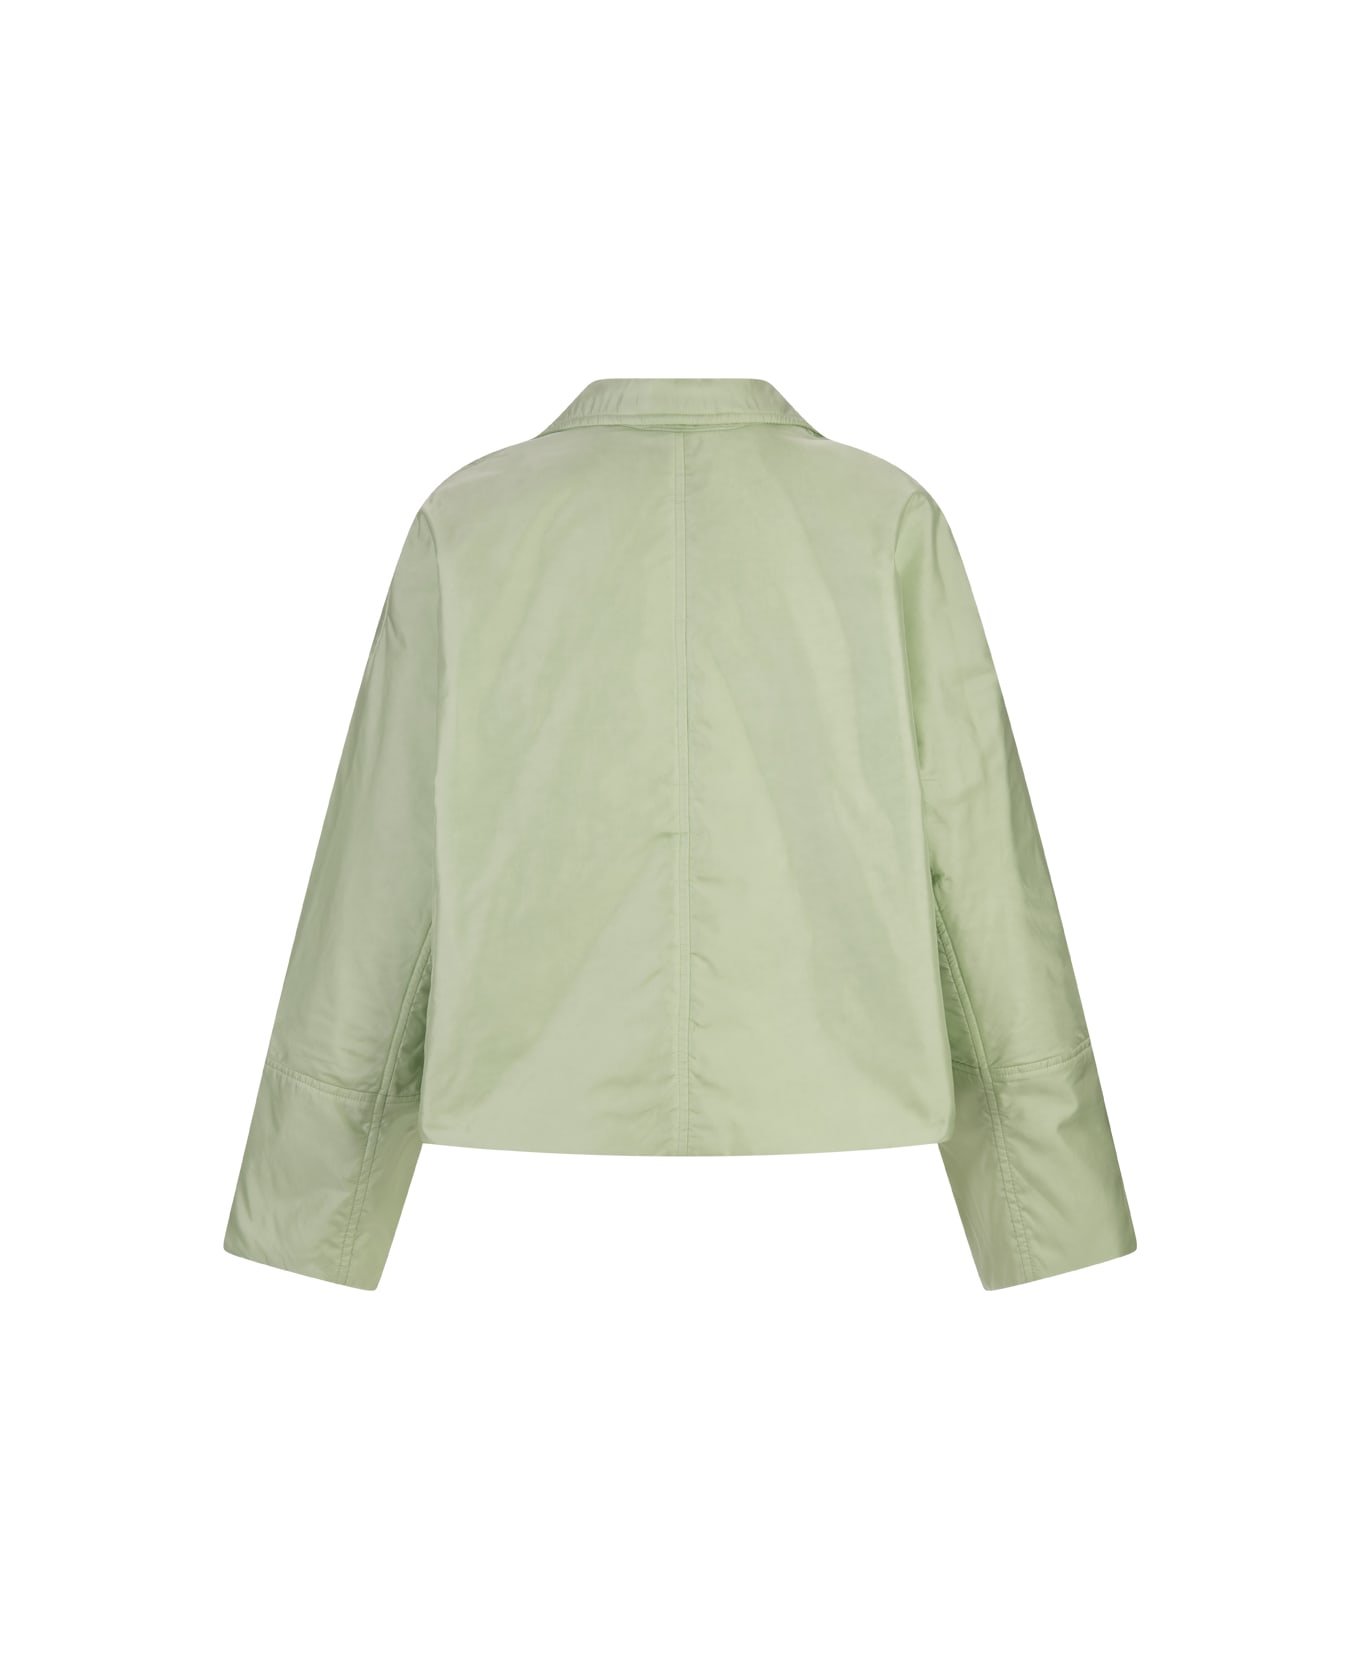 Aspesi Nylon Jacket In Mint Milk - Green レインコート